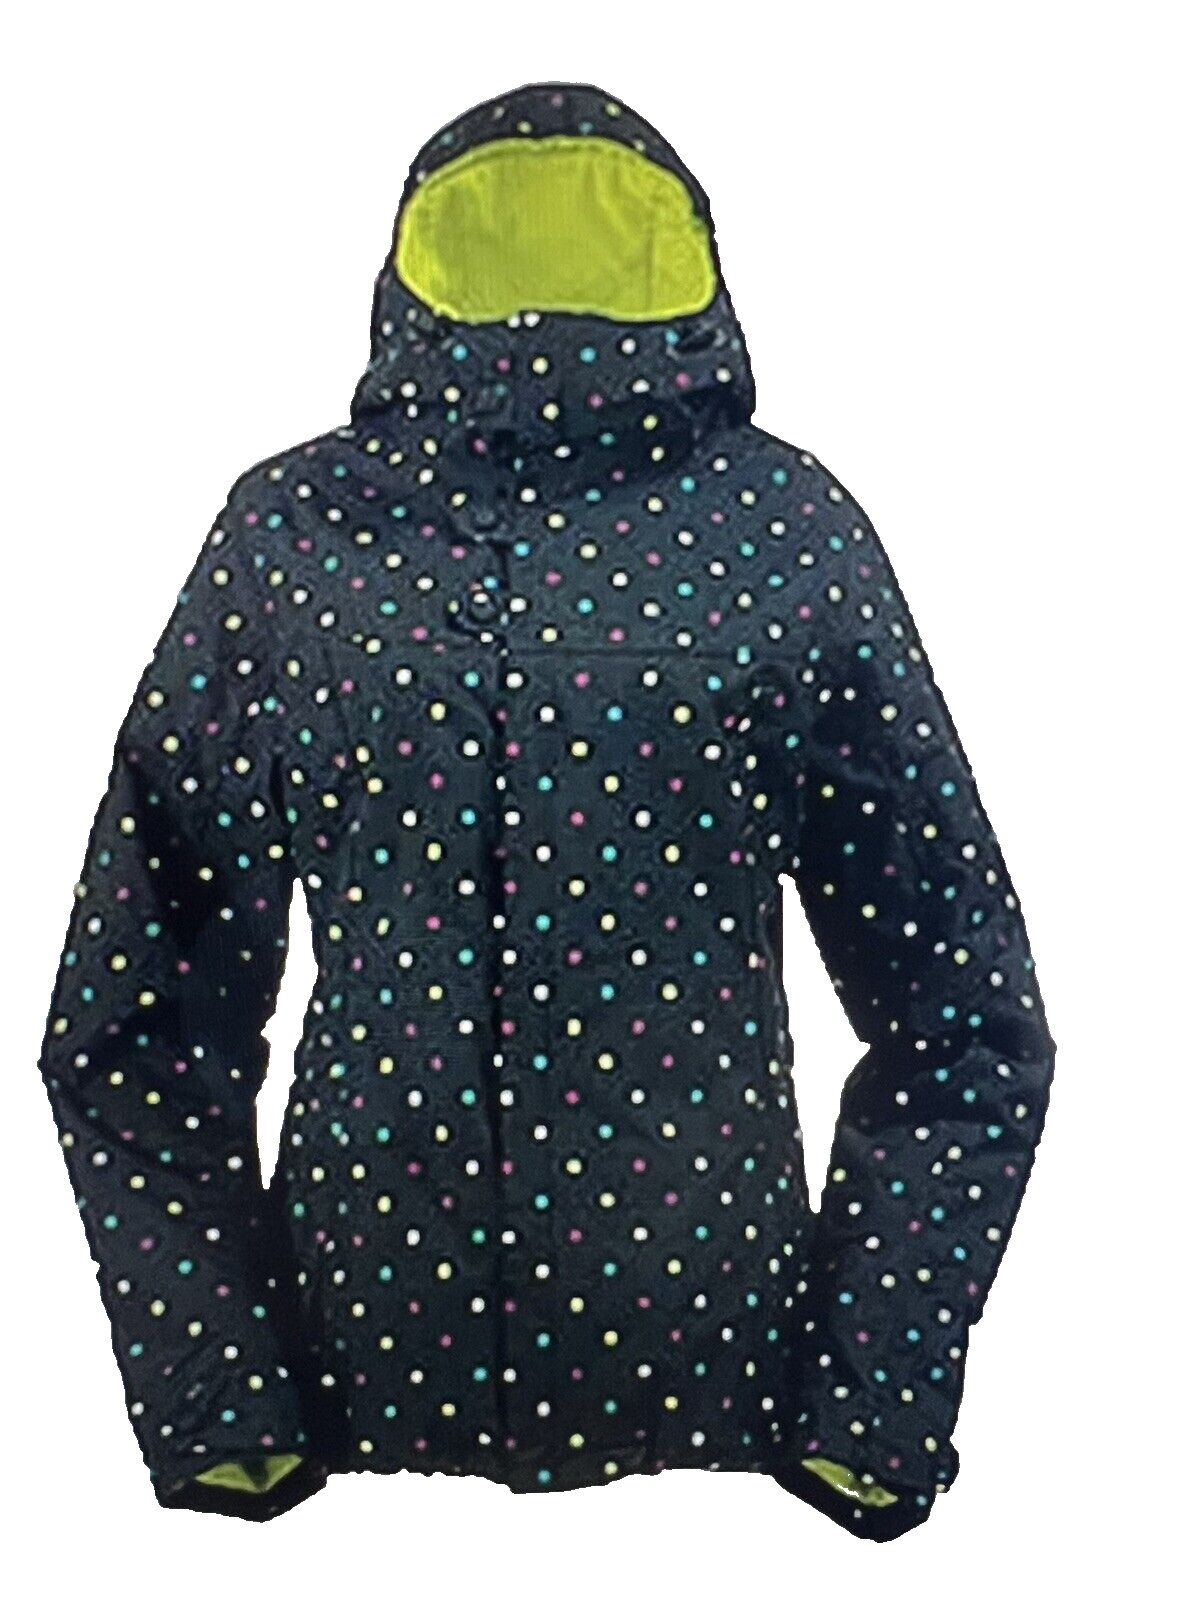 Burton Dry Ride Black Snowboard Ski Zip Up Hooded Winter Jacket Medium Insulated - $89.09